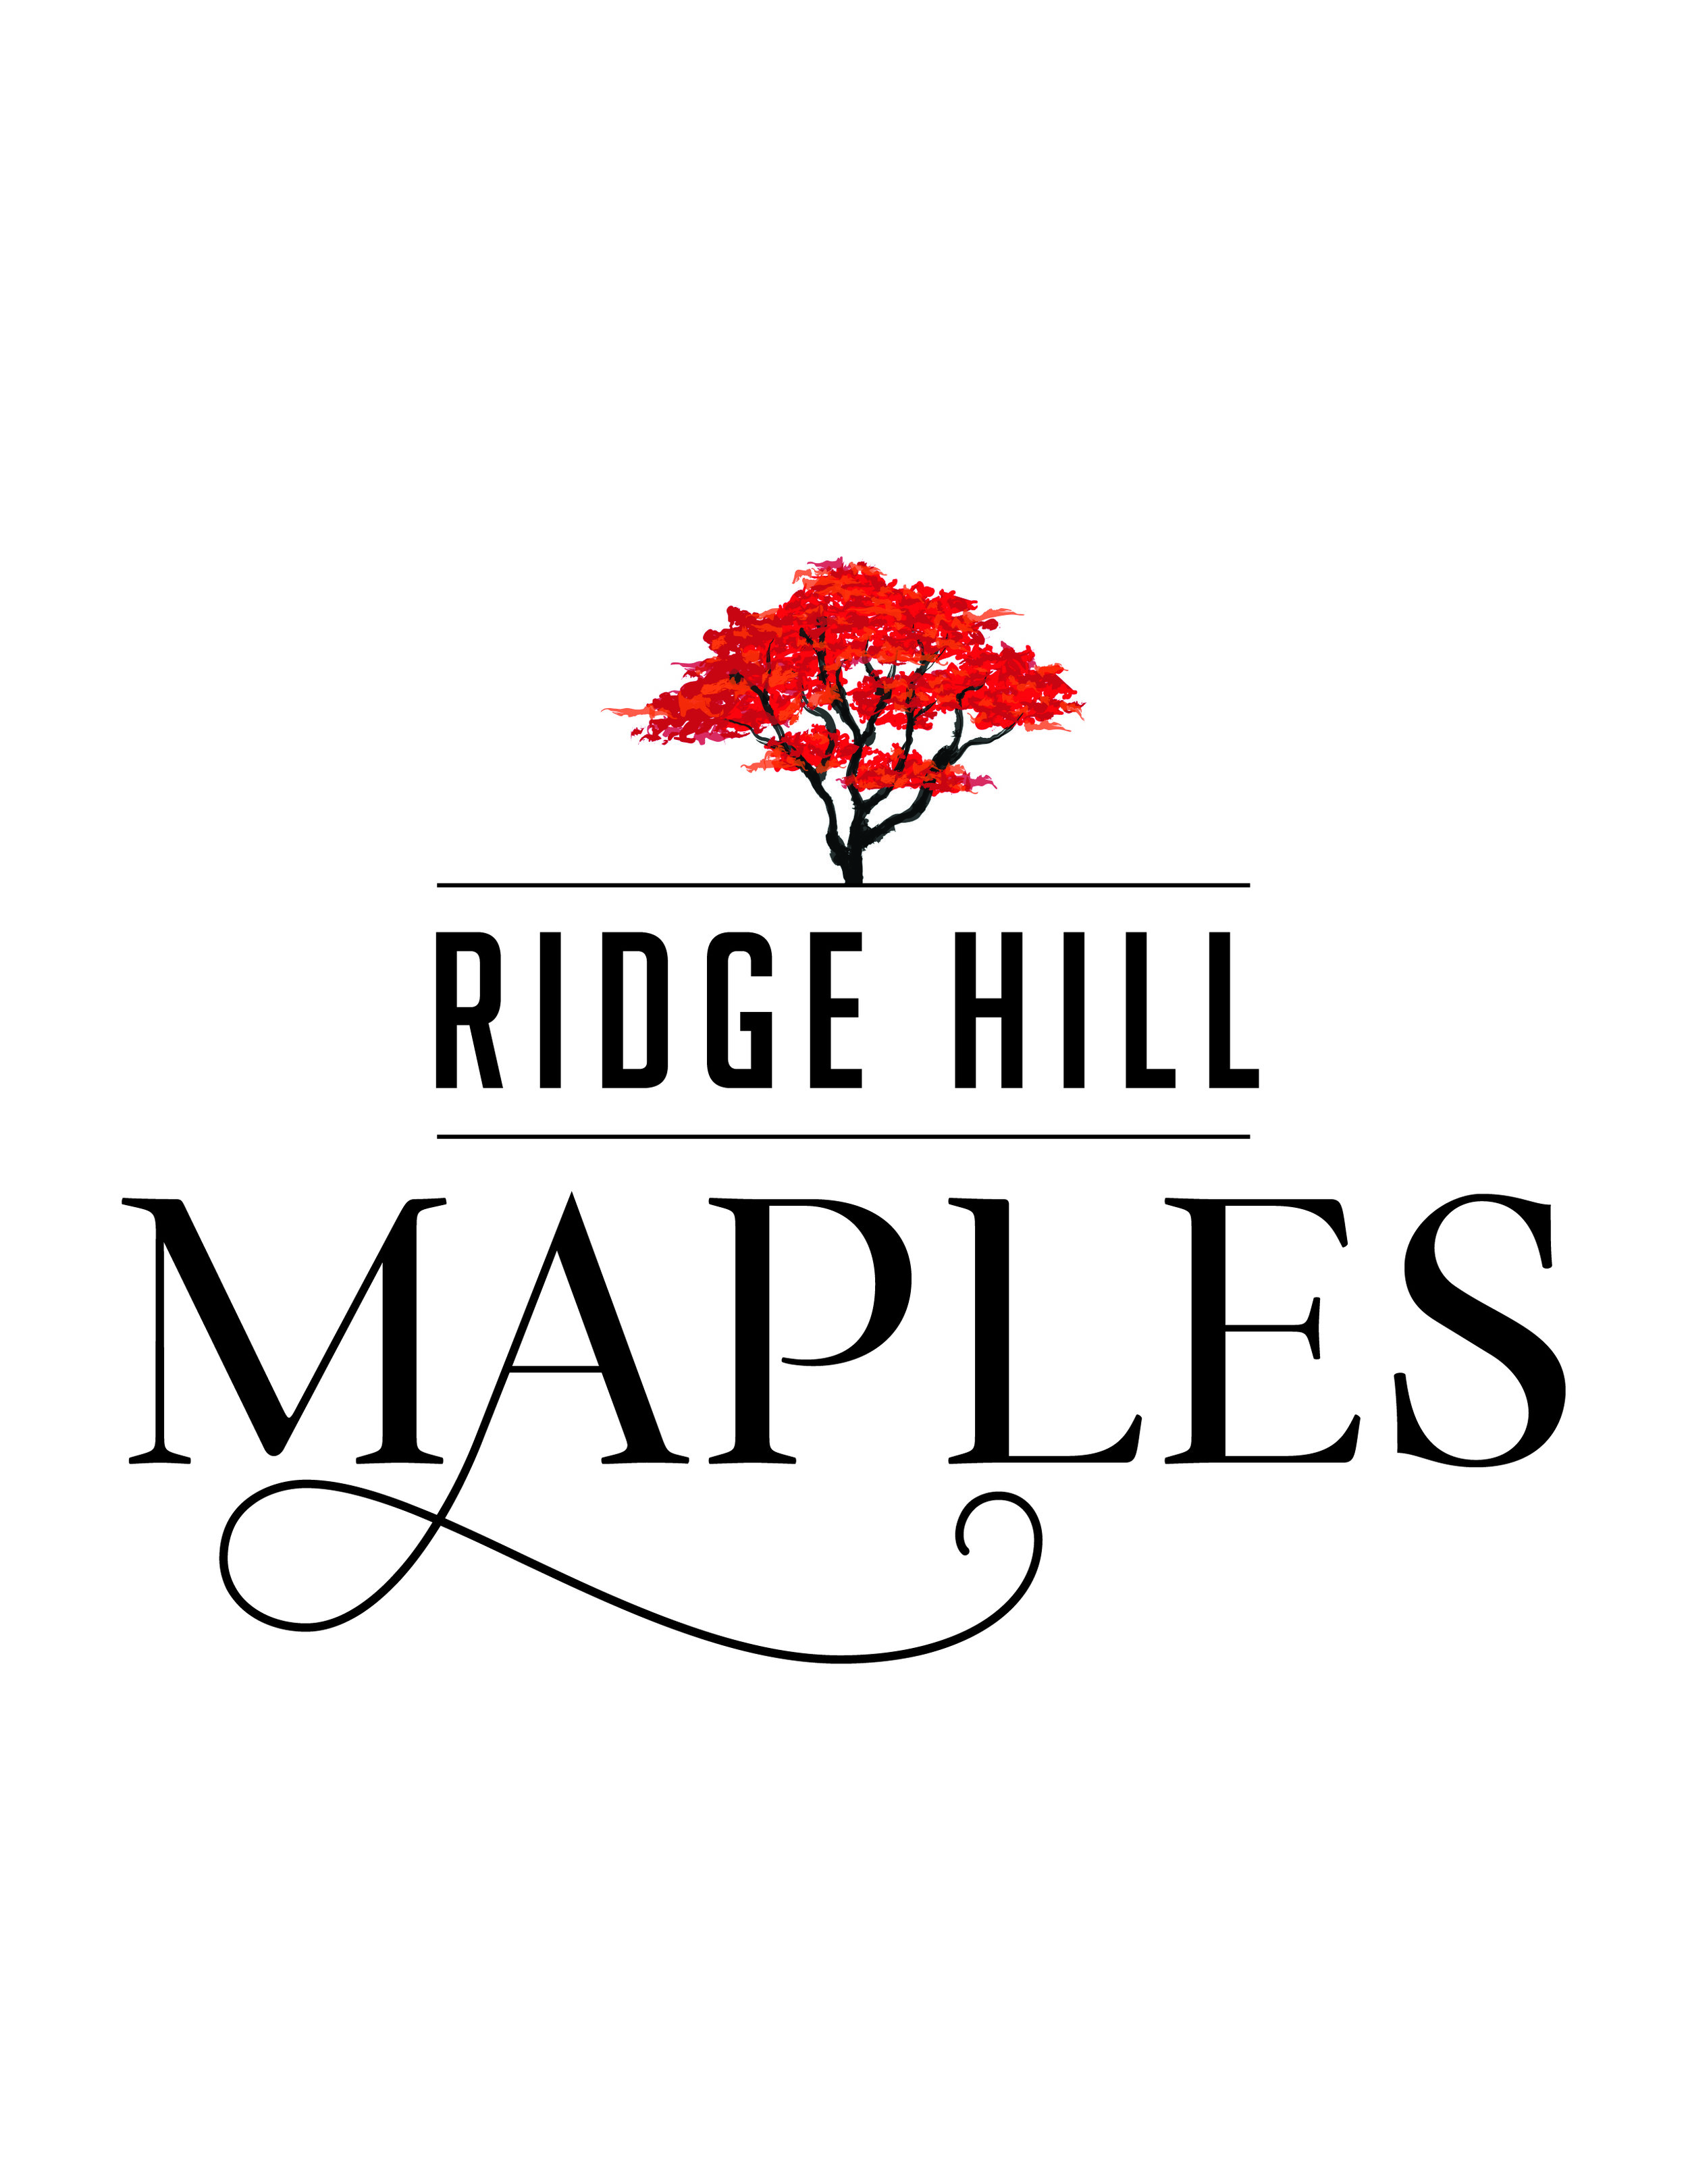 RIDGE HILL MAPLES